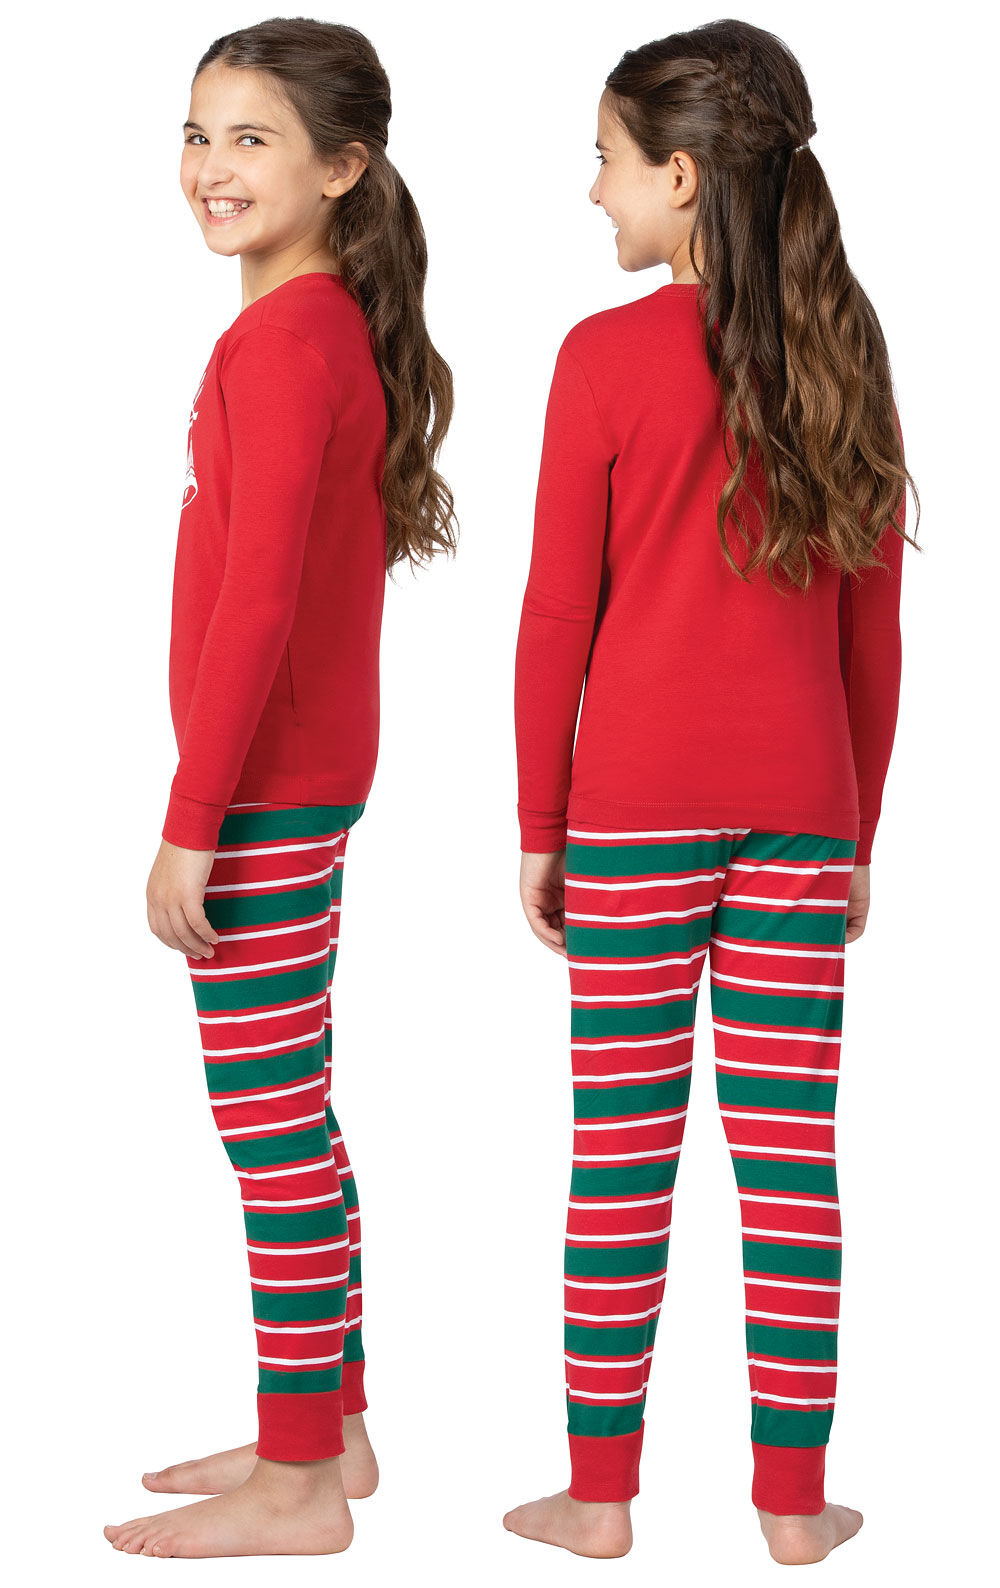 Jashe Pajamas for Girls Striped Cotton Blend Comfy 2pc PJ Set Pants Tween Teen Size 6 